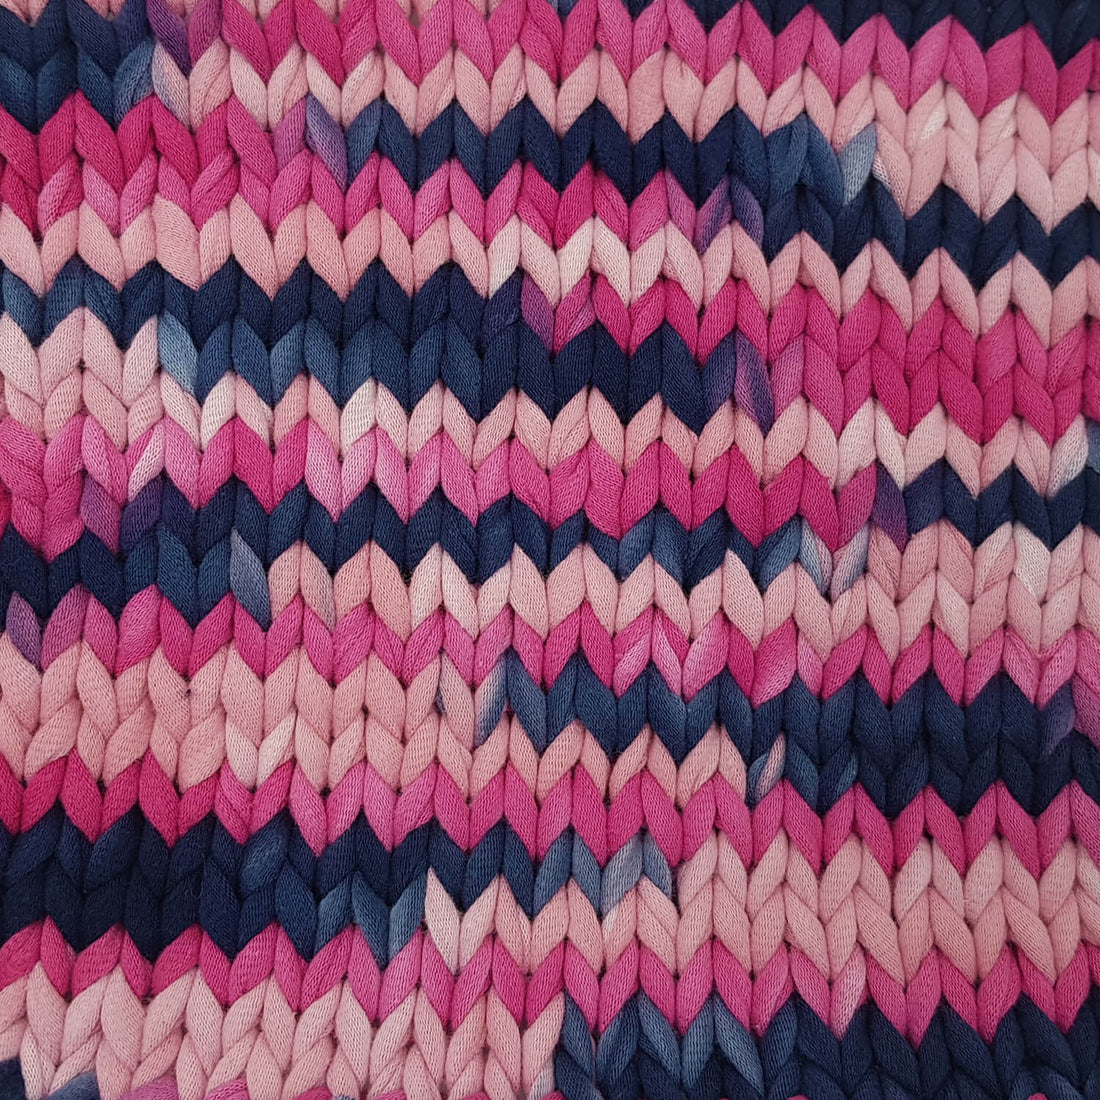 Kotton T-Shirt Yarn - Multi Color M17